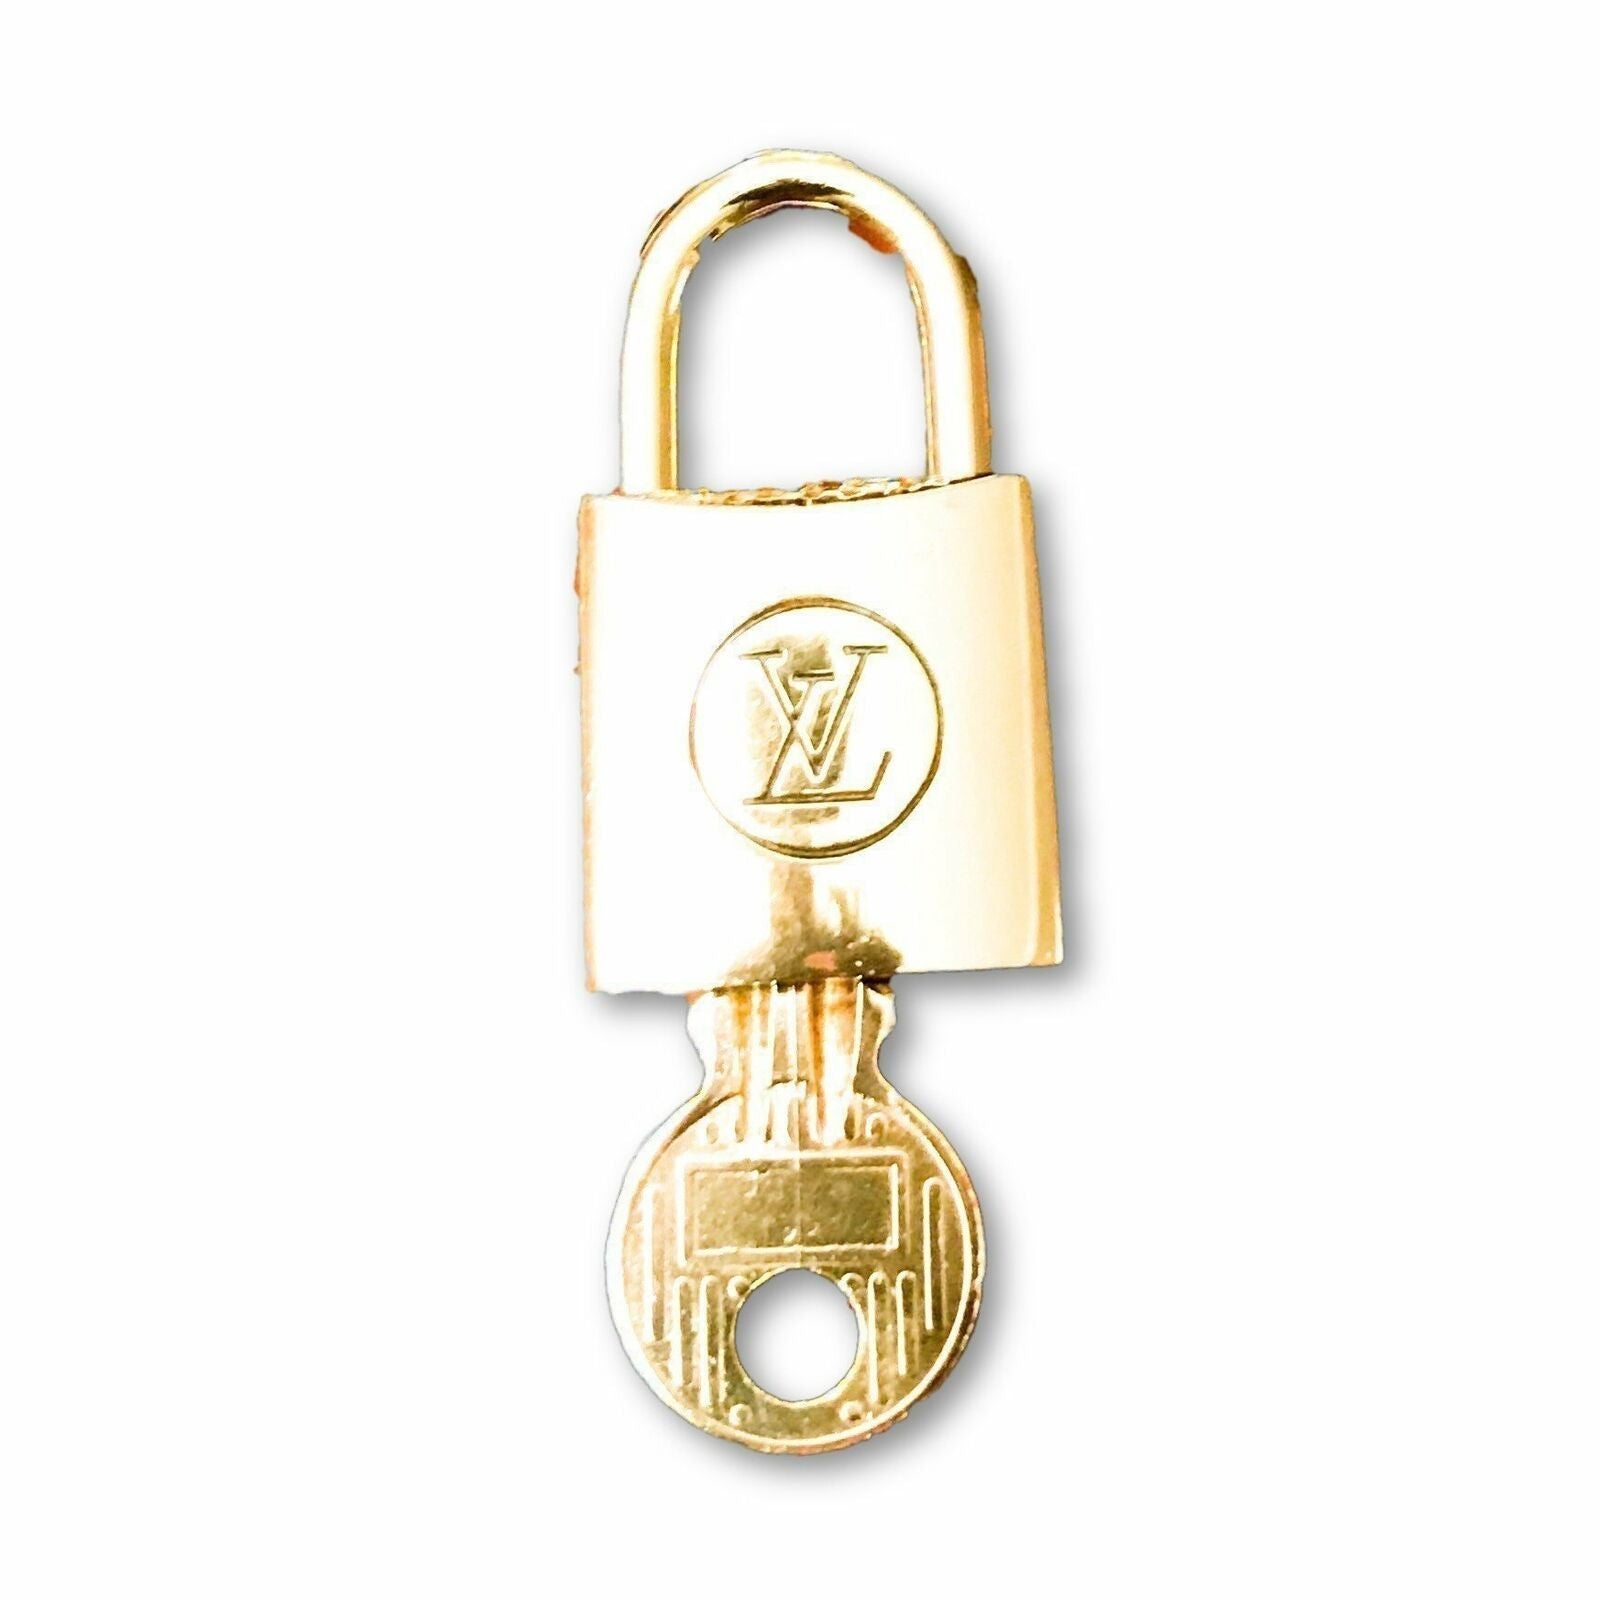 Guaranteed Authentic Vintage Louis Vuitton Lock Key 1980's, 54% OFF